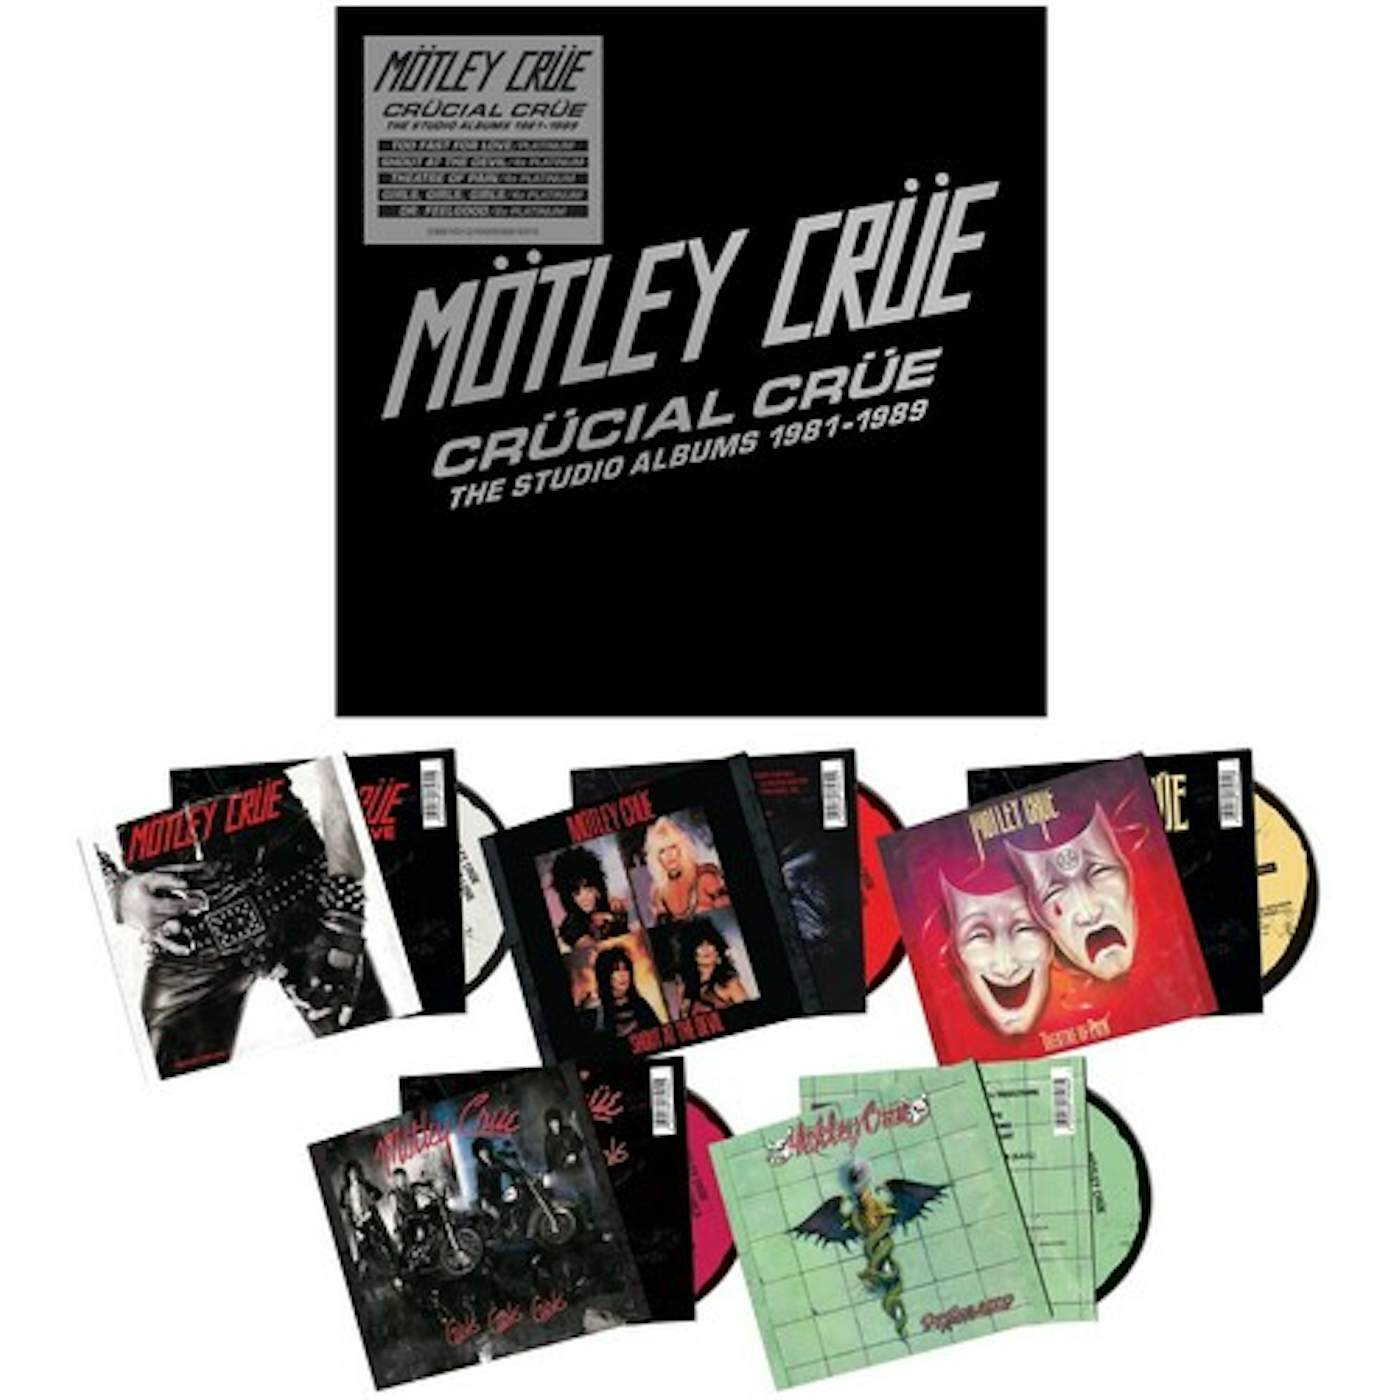 Mötley Crüe CRUCIAL CRUE: THE STUDIO ALBUMS 1981-1989 CD